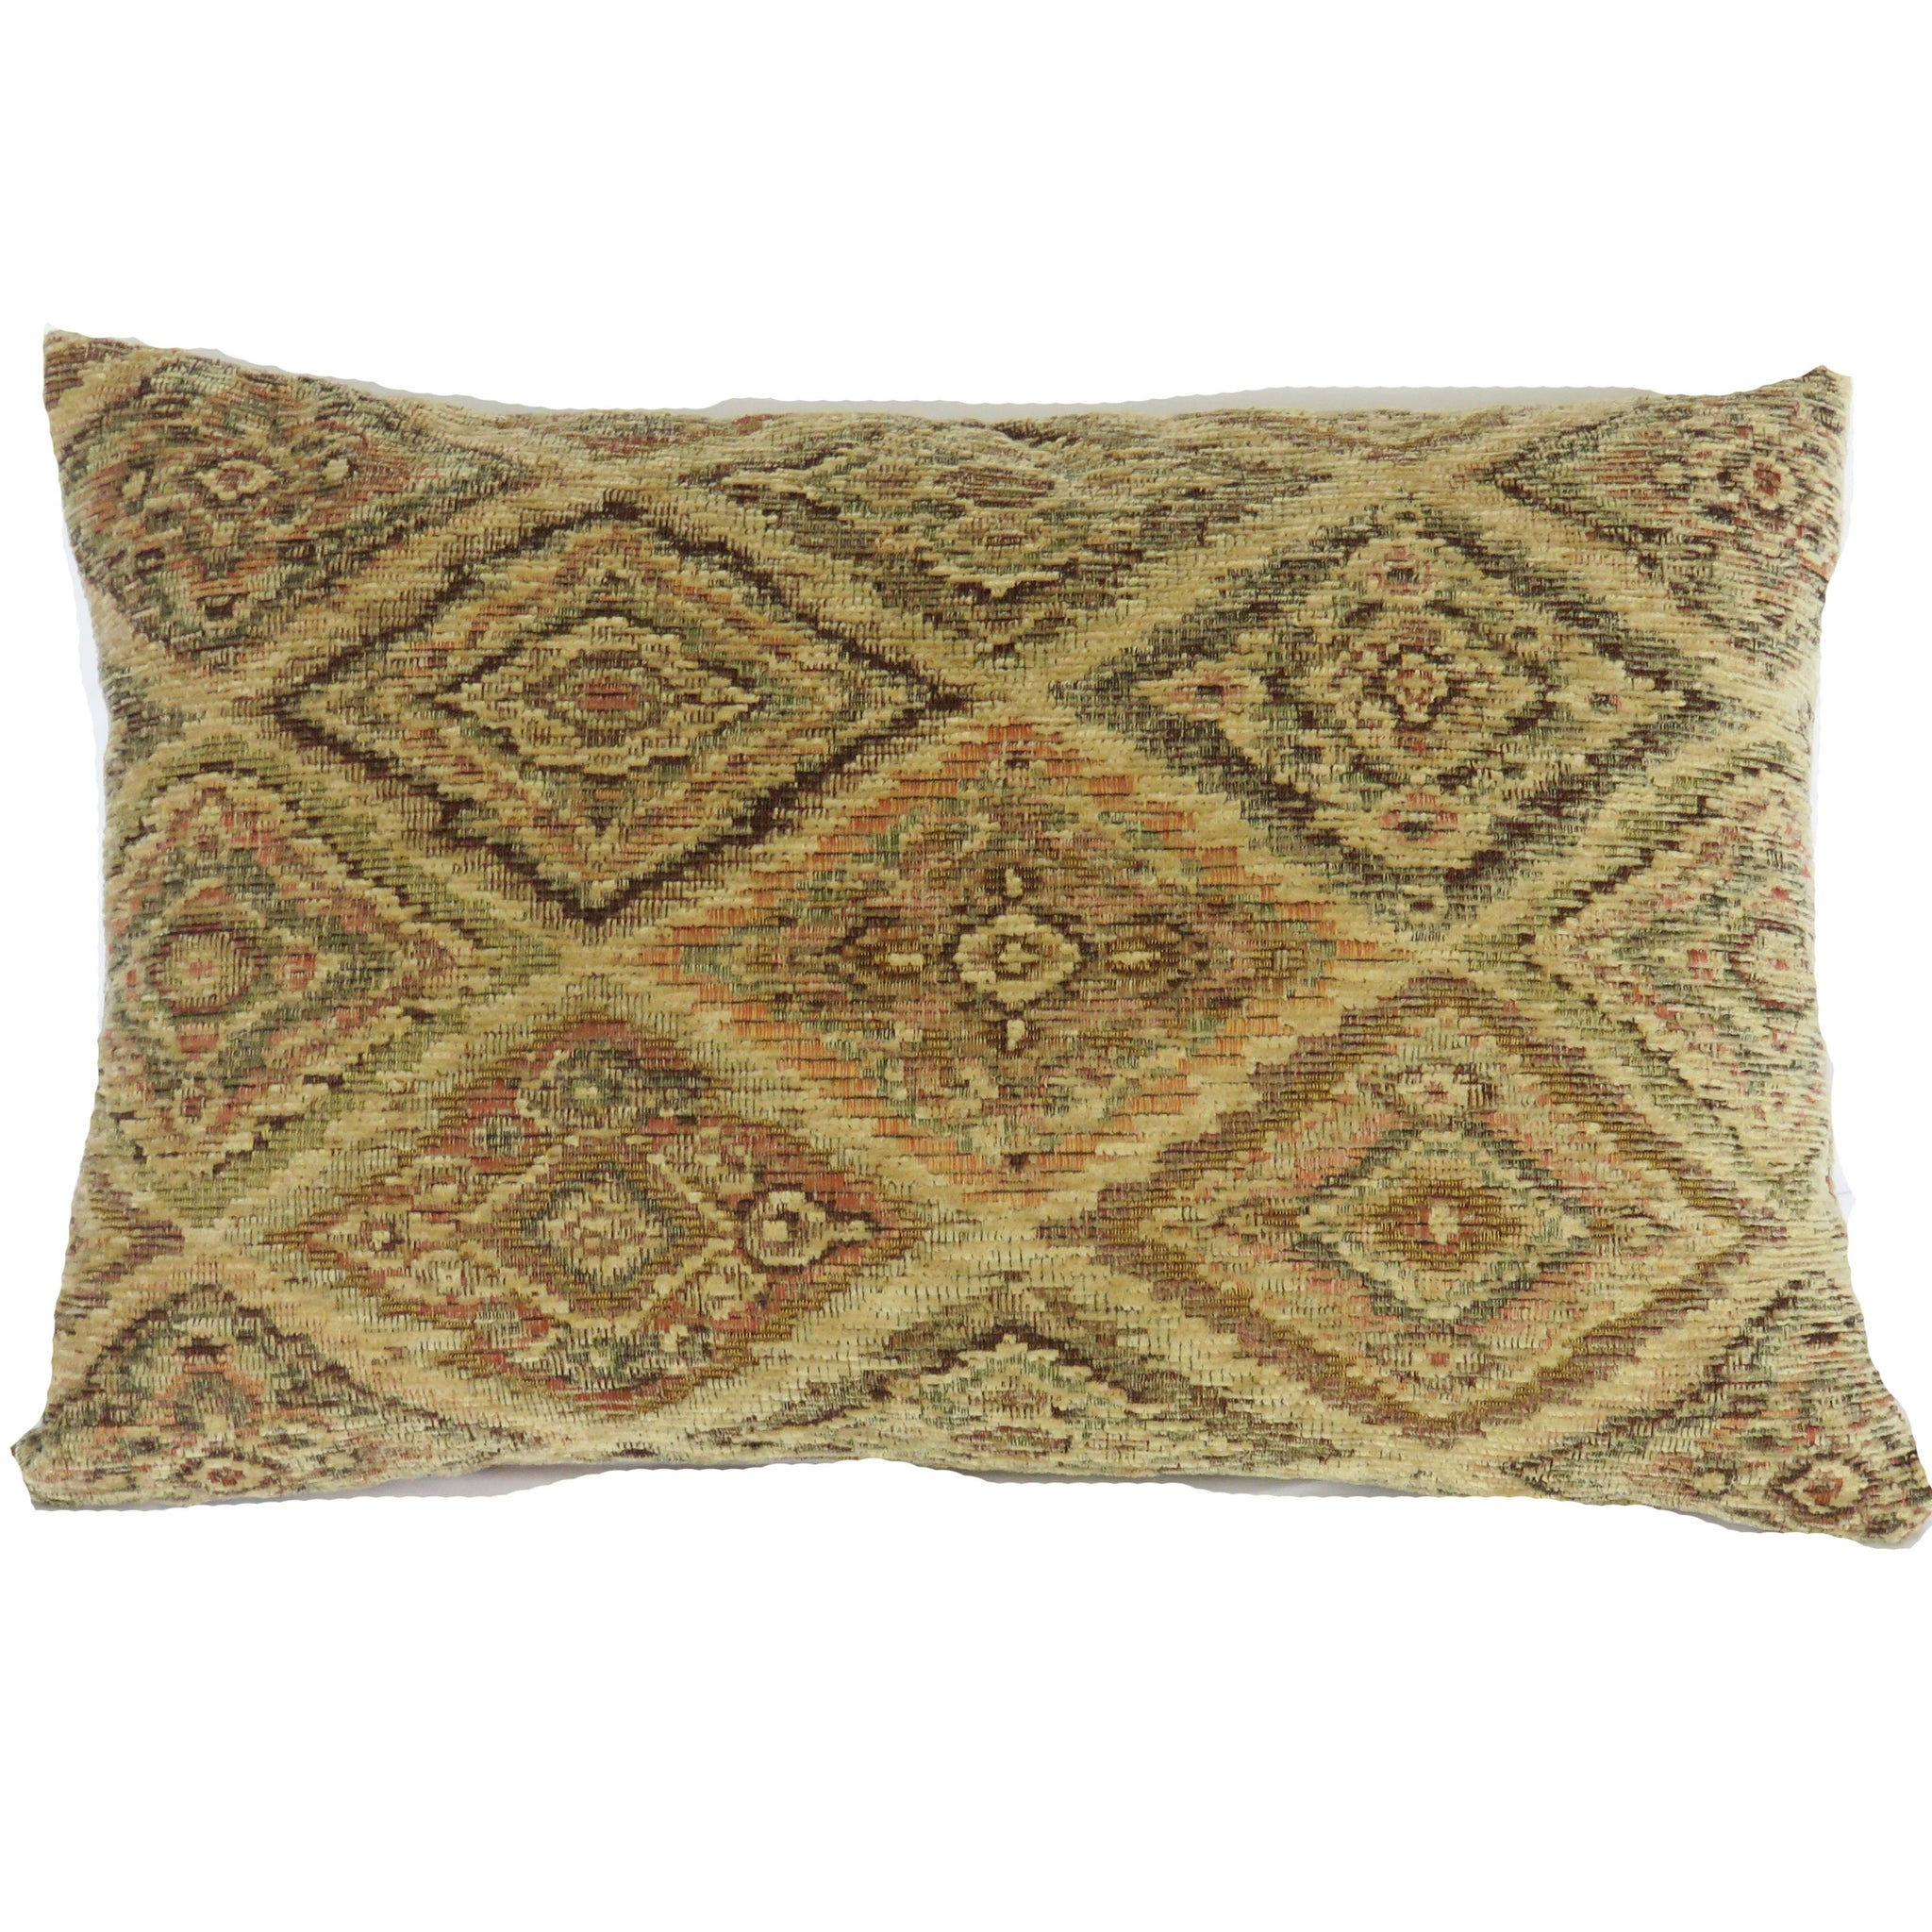 southwest diamond pattern lumbar pillow cover in tan, brown, orange